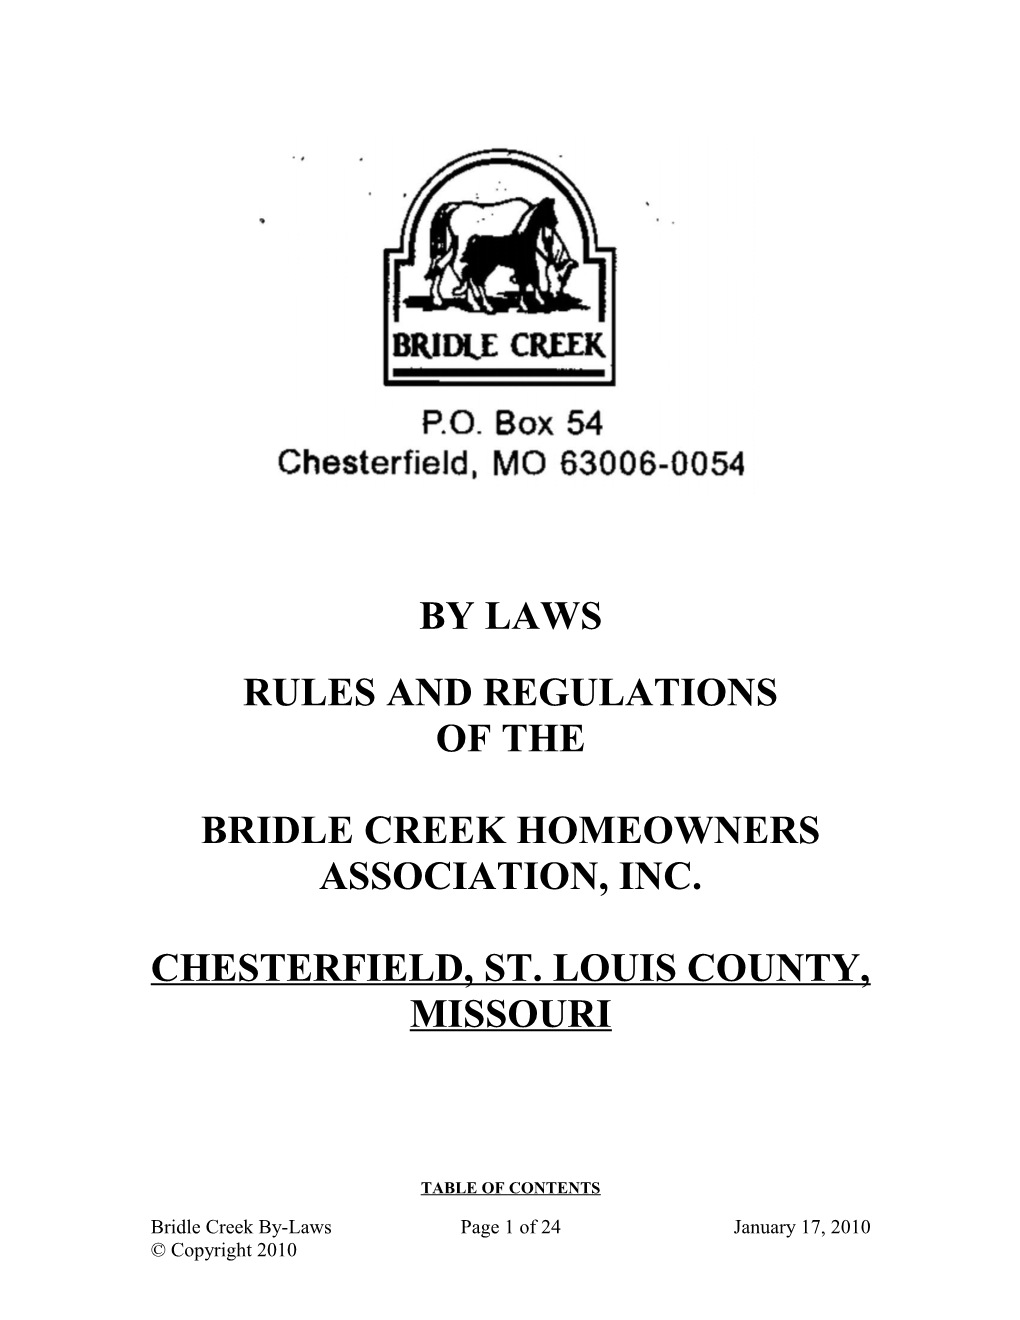 Bridle Creek Homeowners Association, Inc